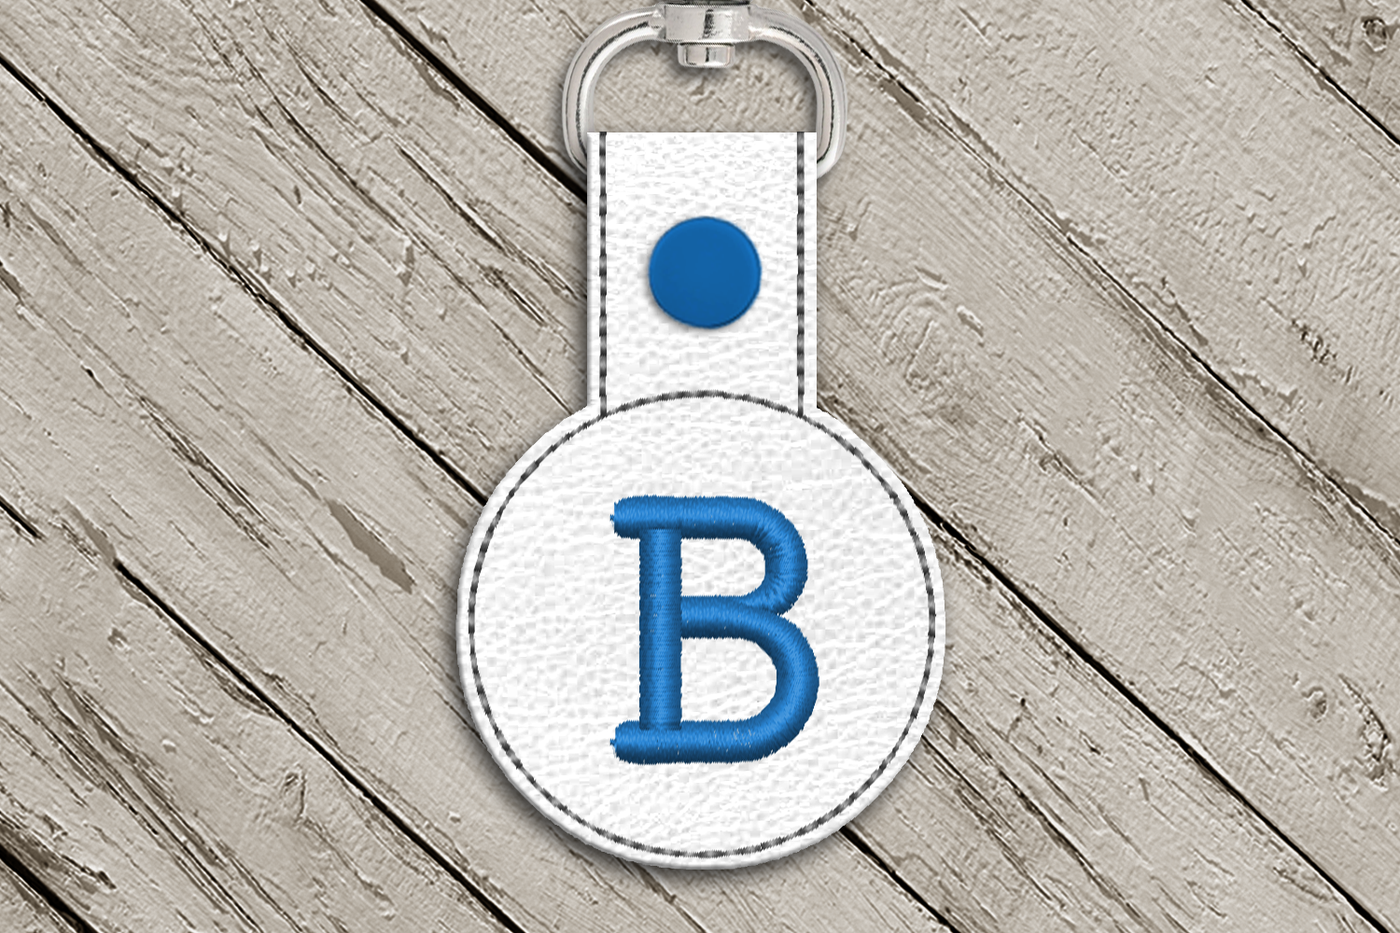 Letter B in the hoop key fob design